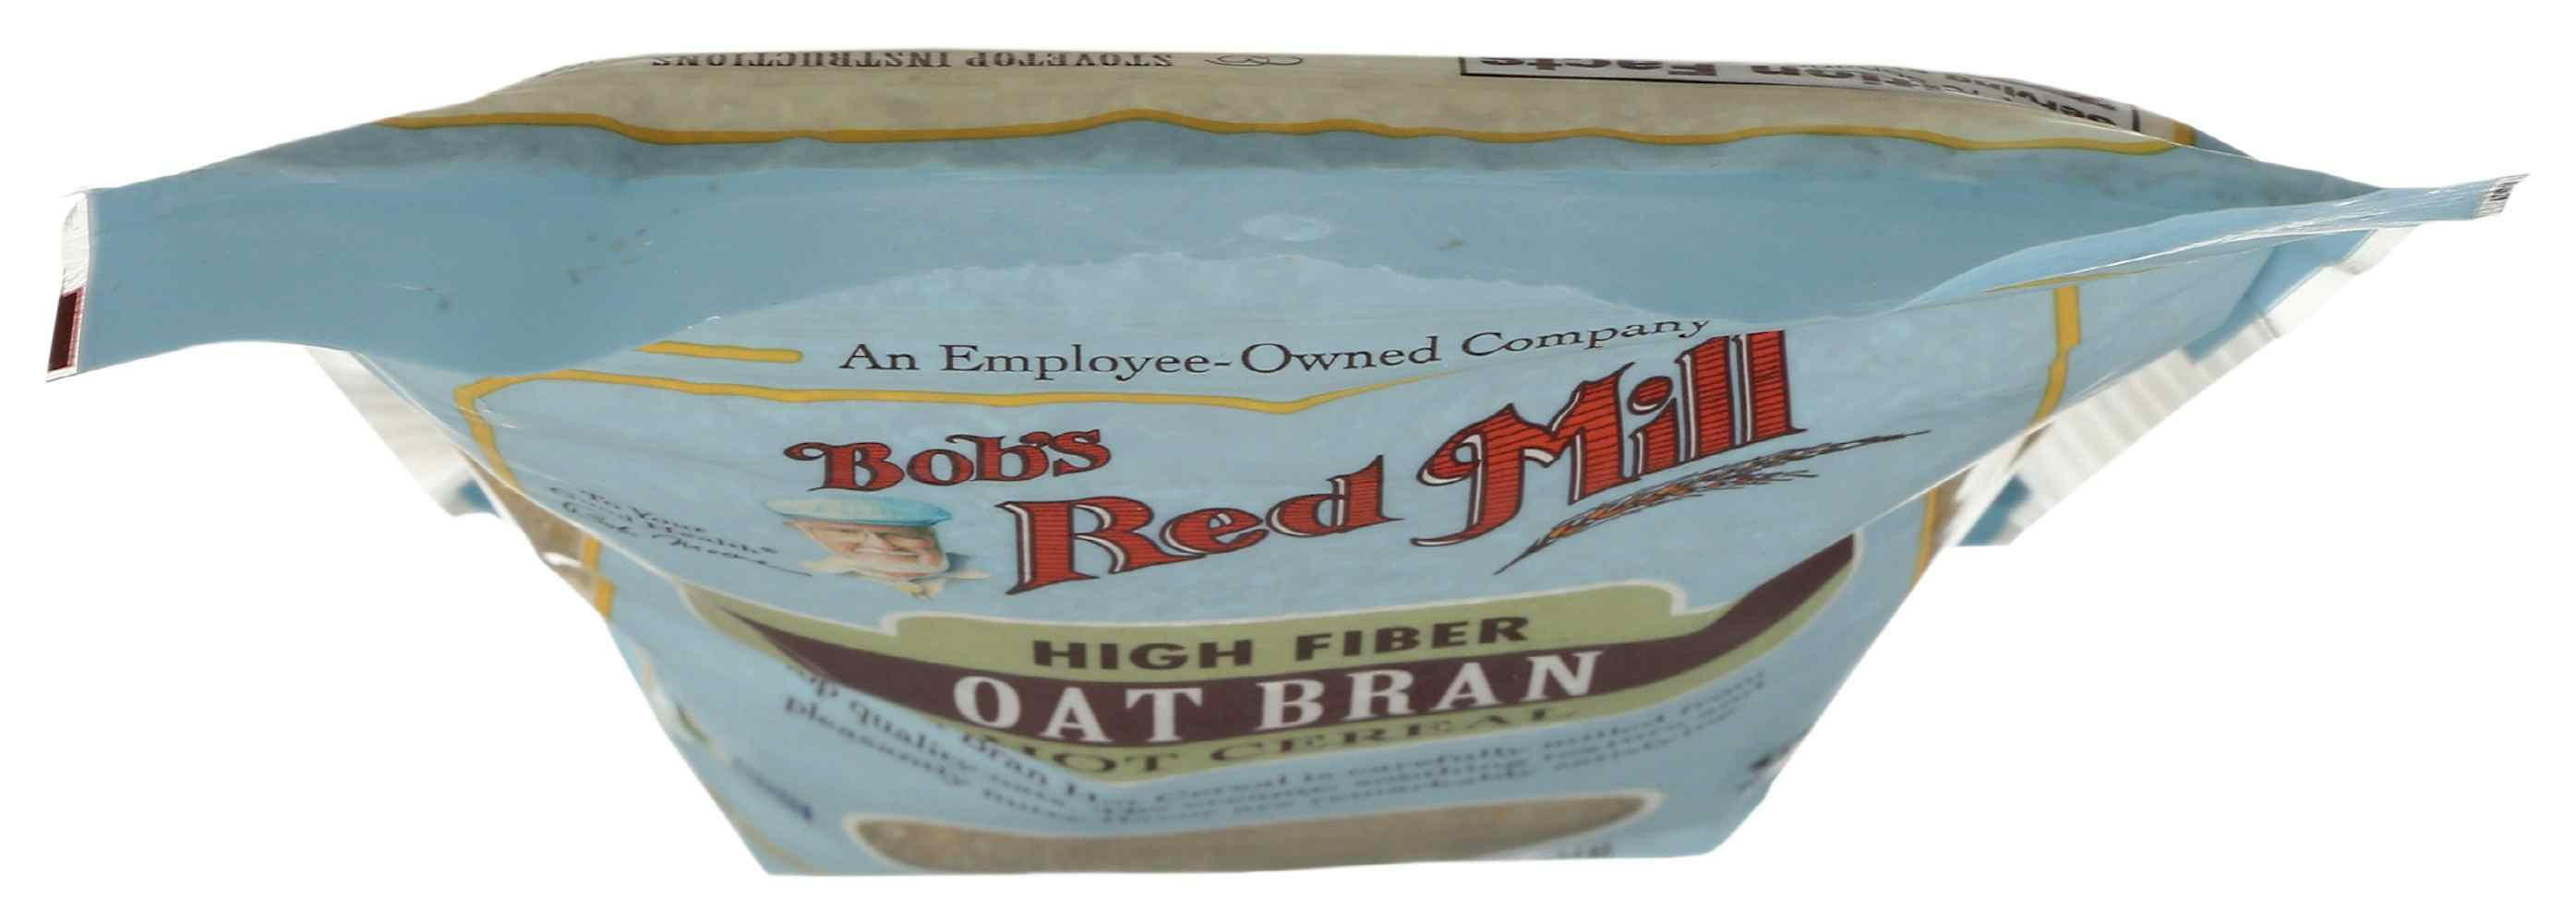 Bob's Red Mill High Fiber Oat Bran Hot Cereal